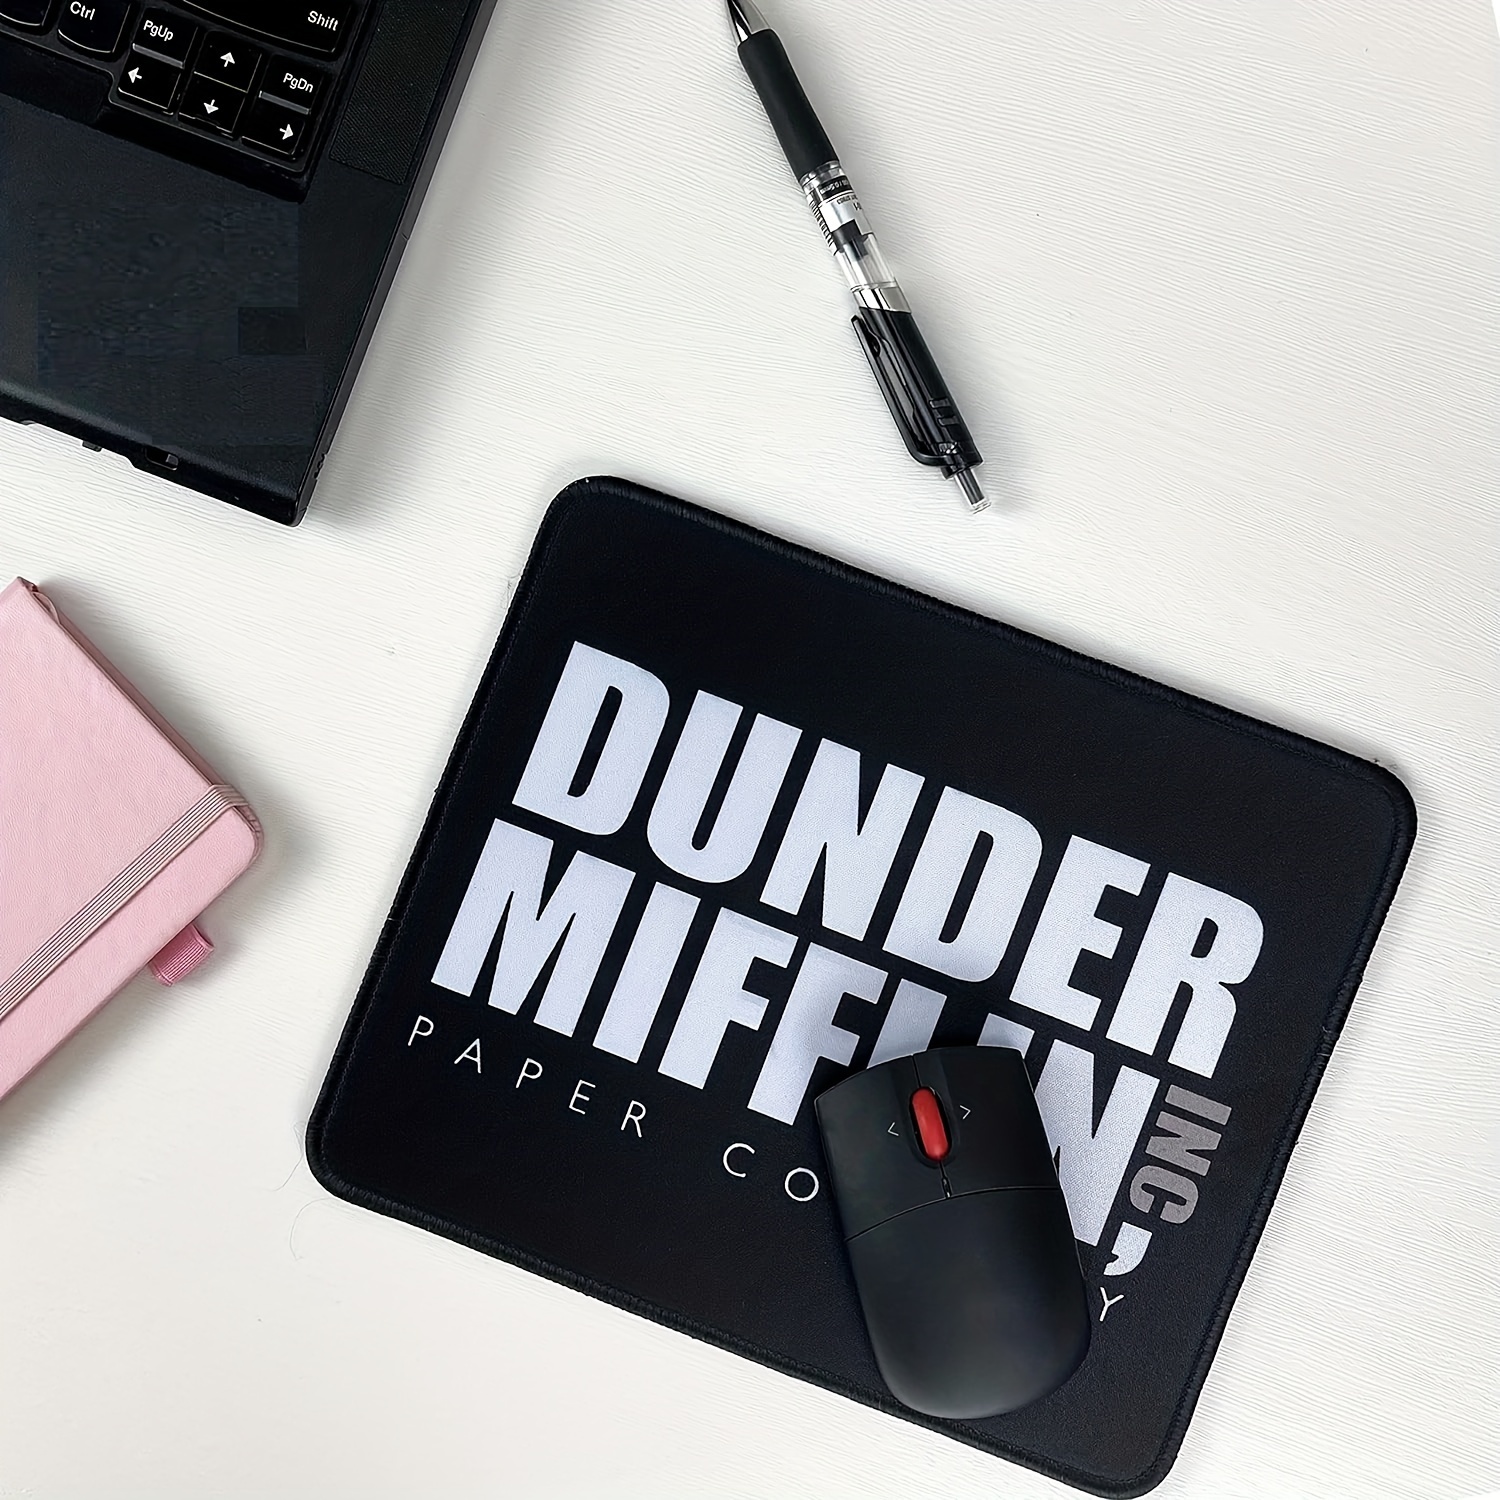 Dunder Mifflin Paper Company Vinyl Sticker. the Office Laptop 